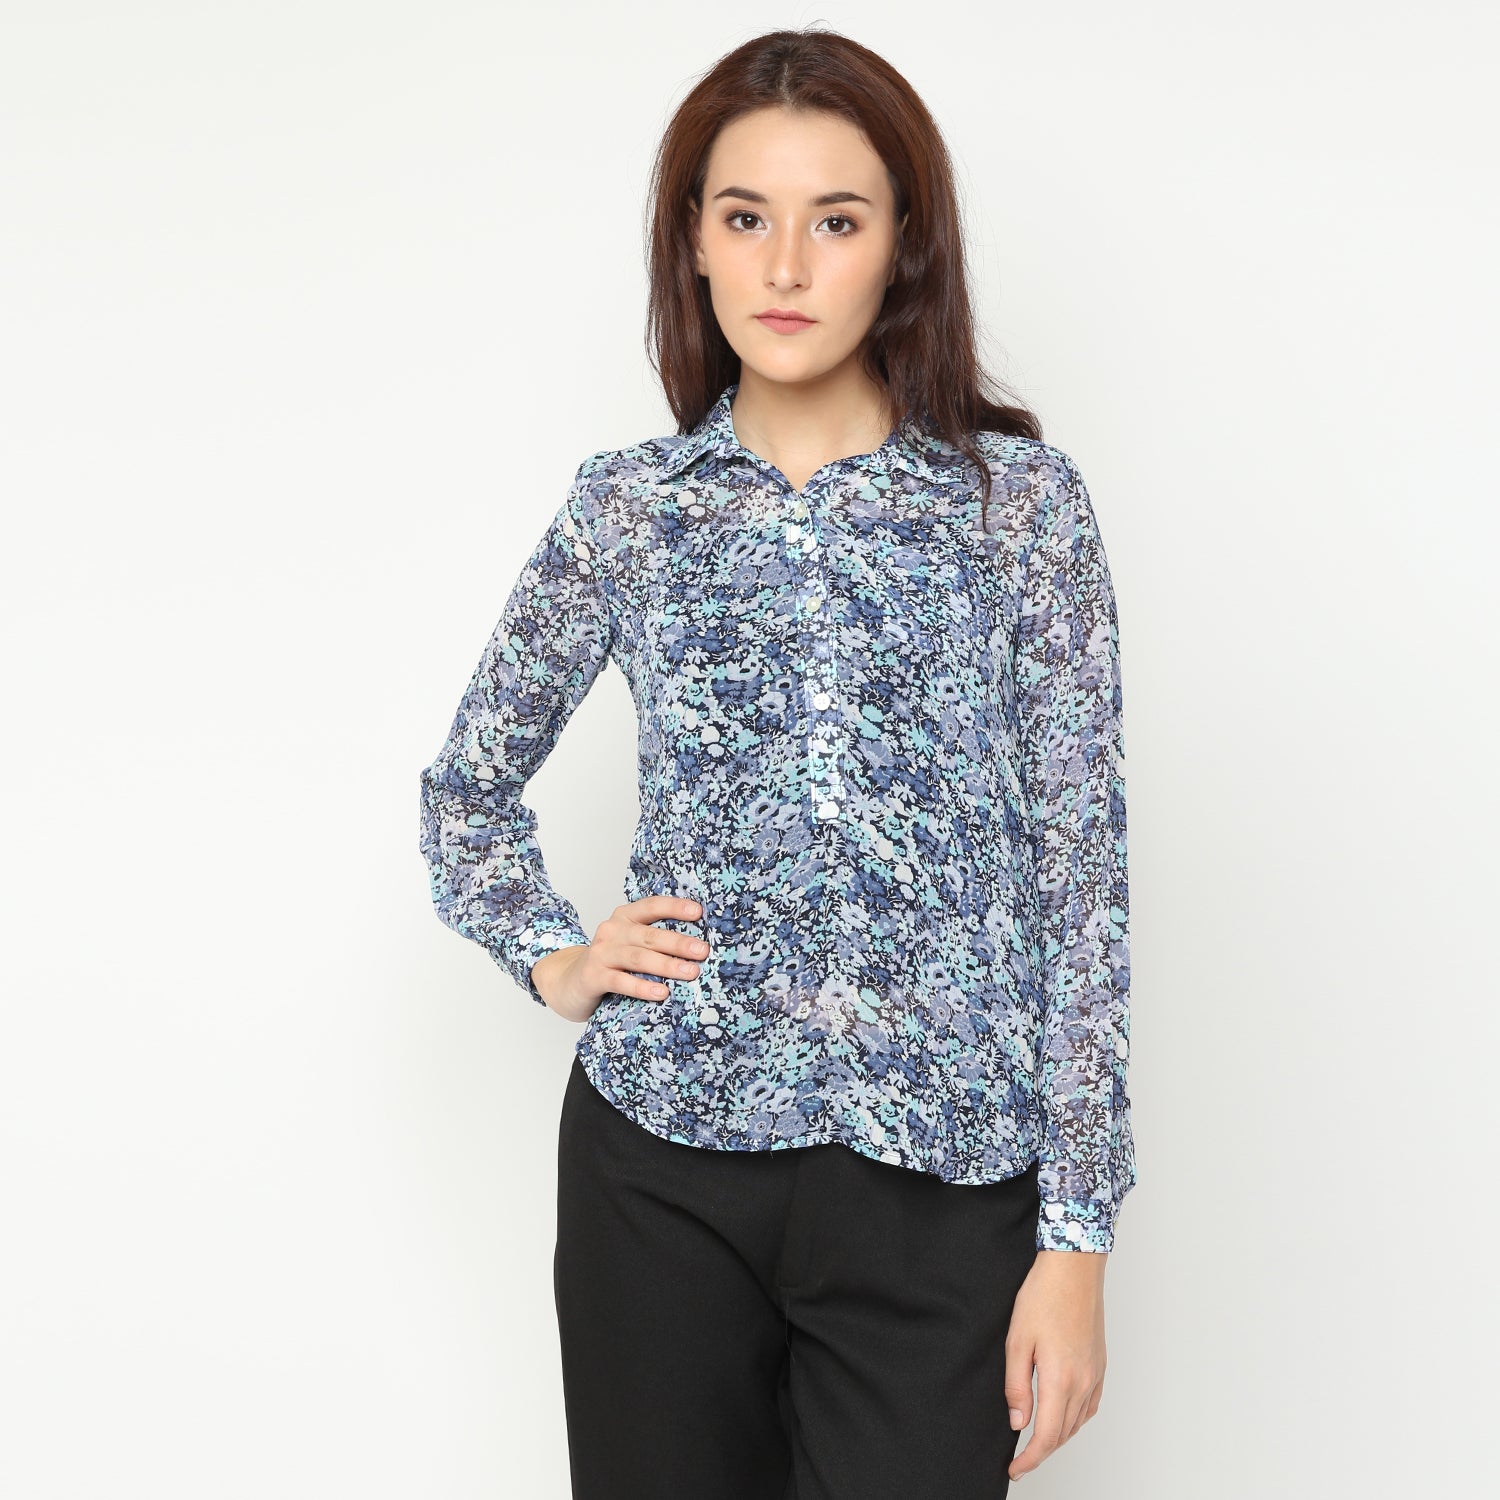 Kemeja wanita-Popover Blue Floral Shirt (ATS 16)